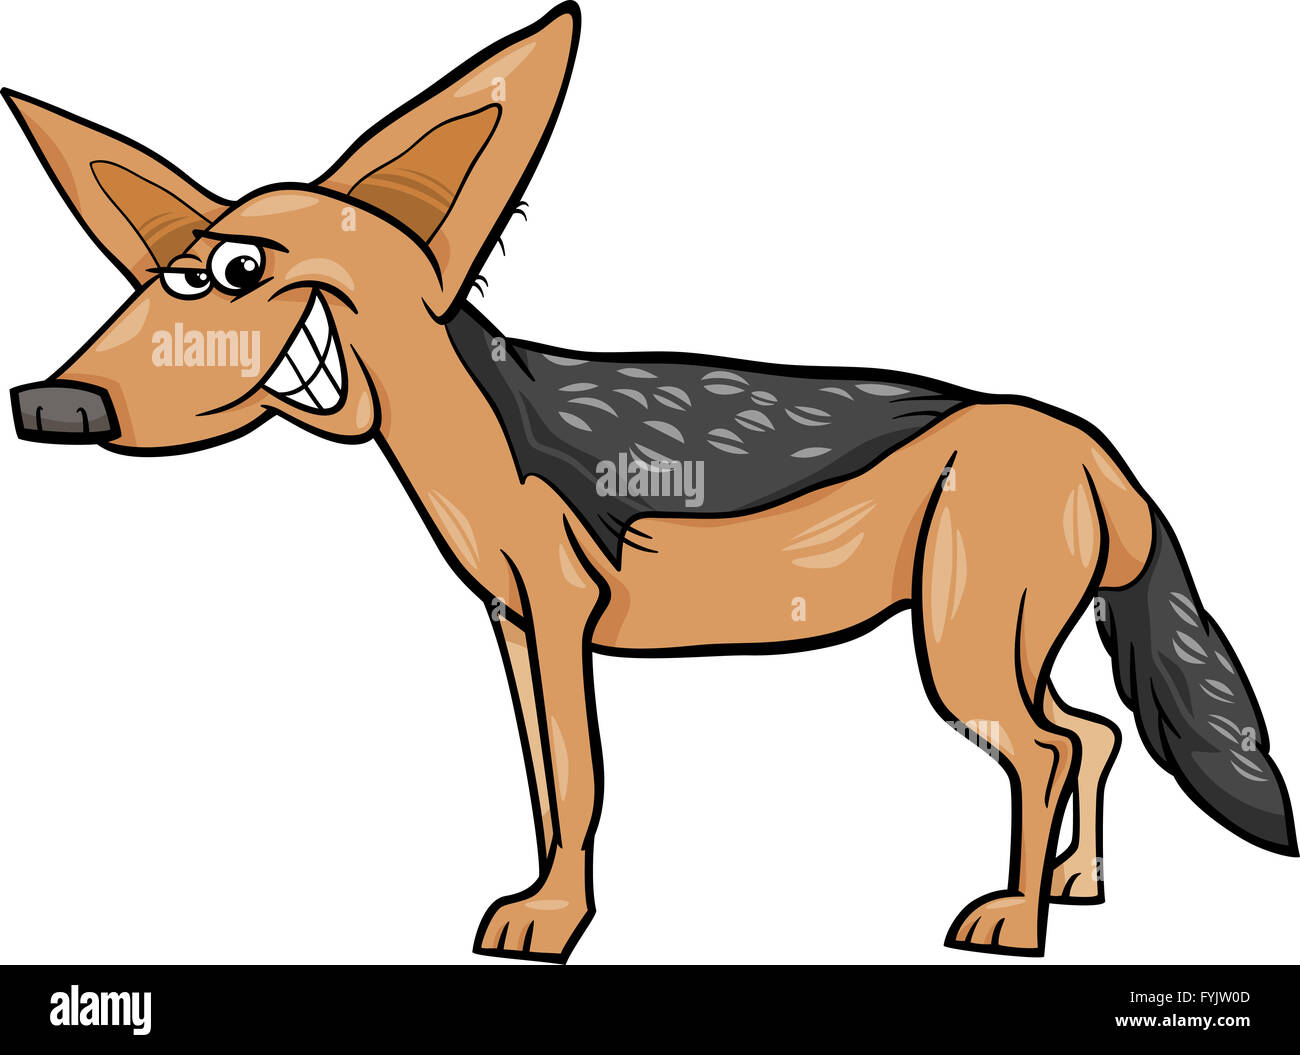 jackal animal cartoon illustration Stock Photo